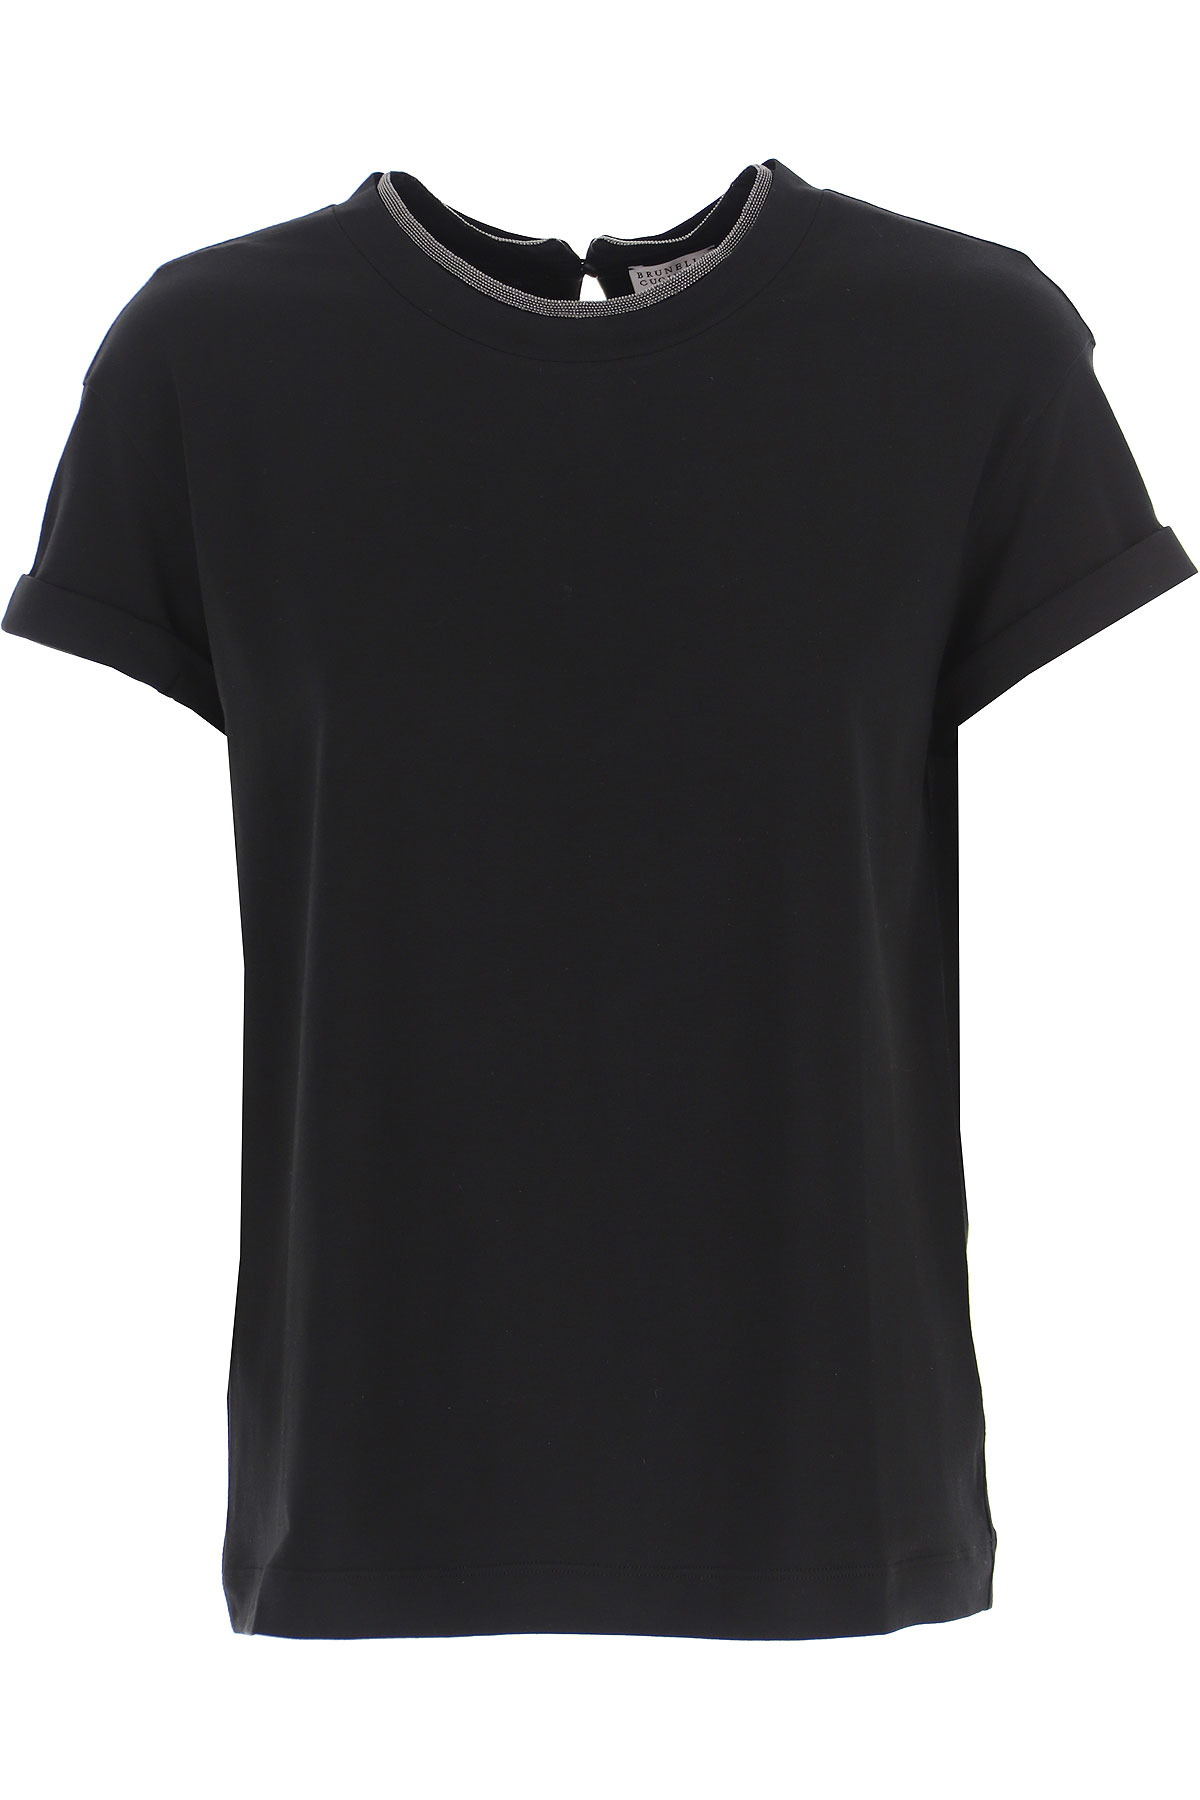 Brunello CucinelliBrunello Cucinelli T-Shirt for Women, Black, Cotton